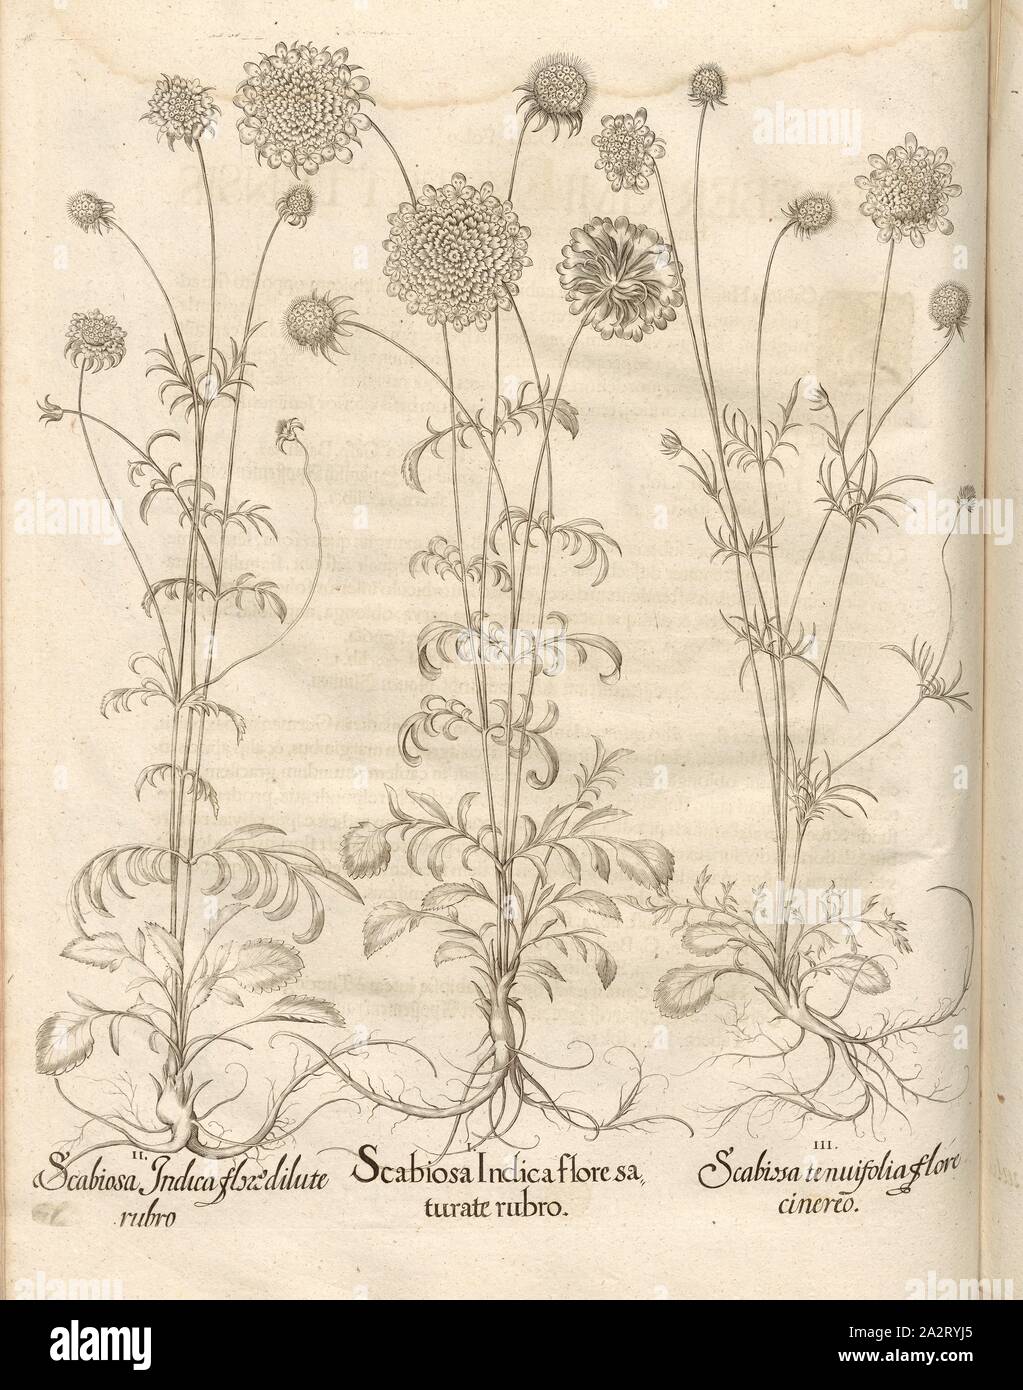 Scabiosa ..., Scabious, Copperplate, p. 568, Besler, Basilius; Jungermann, Ludwig, 1713, Basilius Besler: Hortus Eystettensis (...). Nürnberg, 1713 Stock Photo